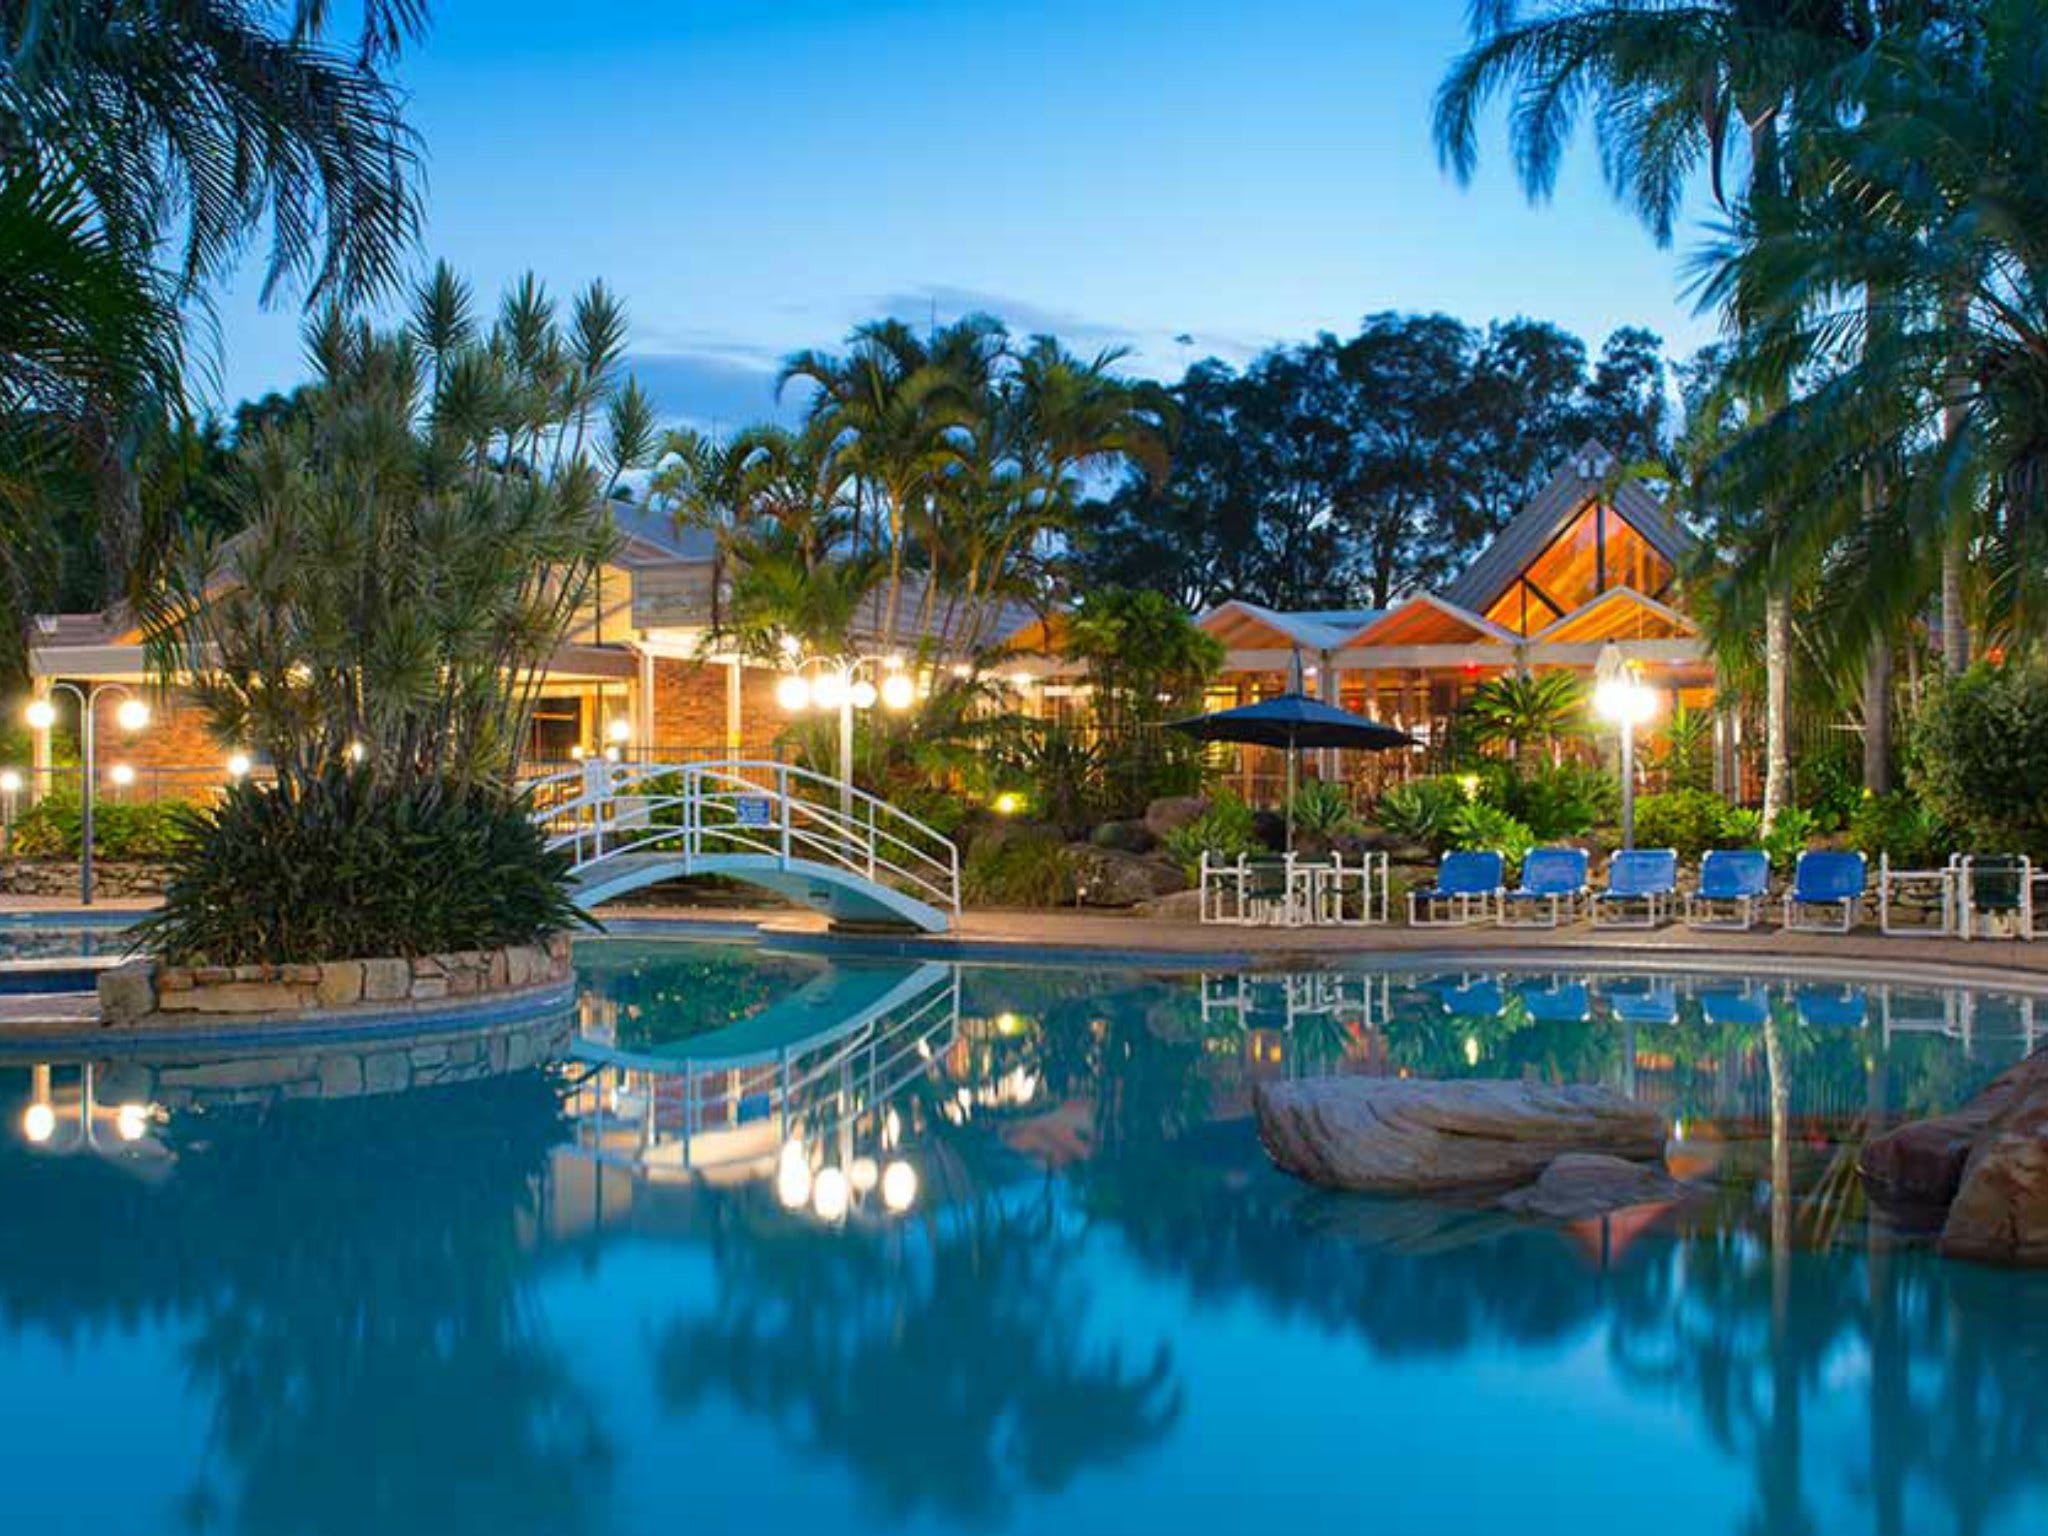 Boambee Bay Resort - Accommodation in Bendigo